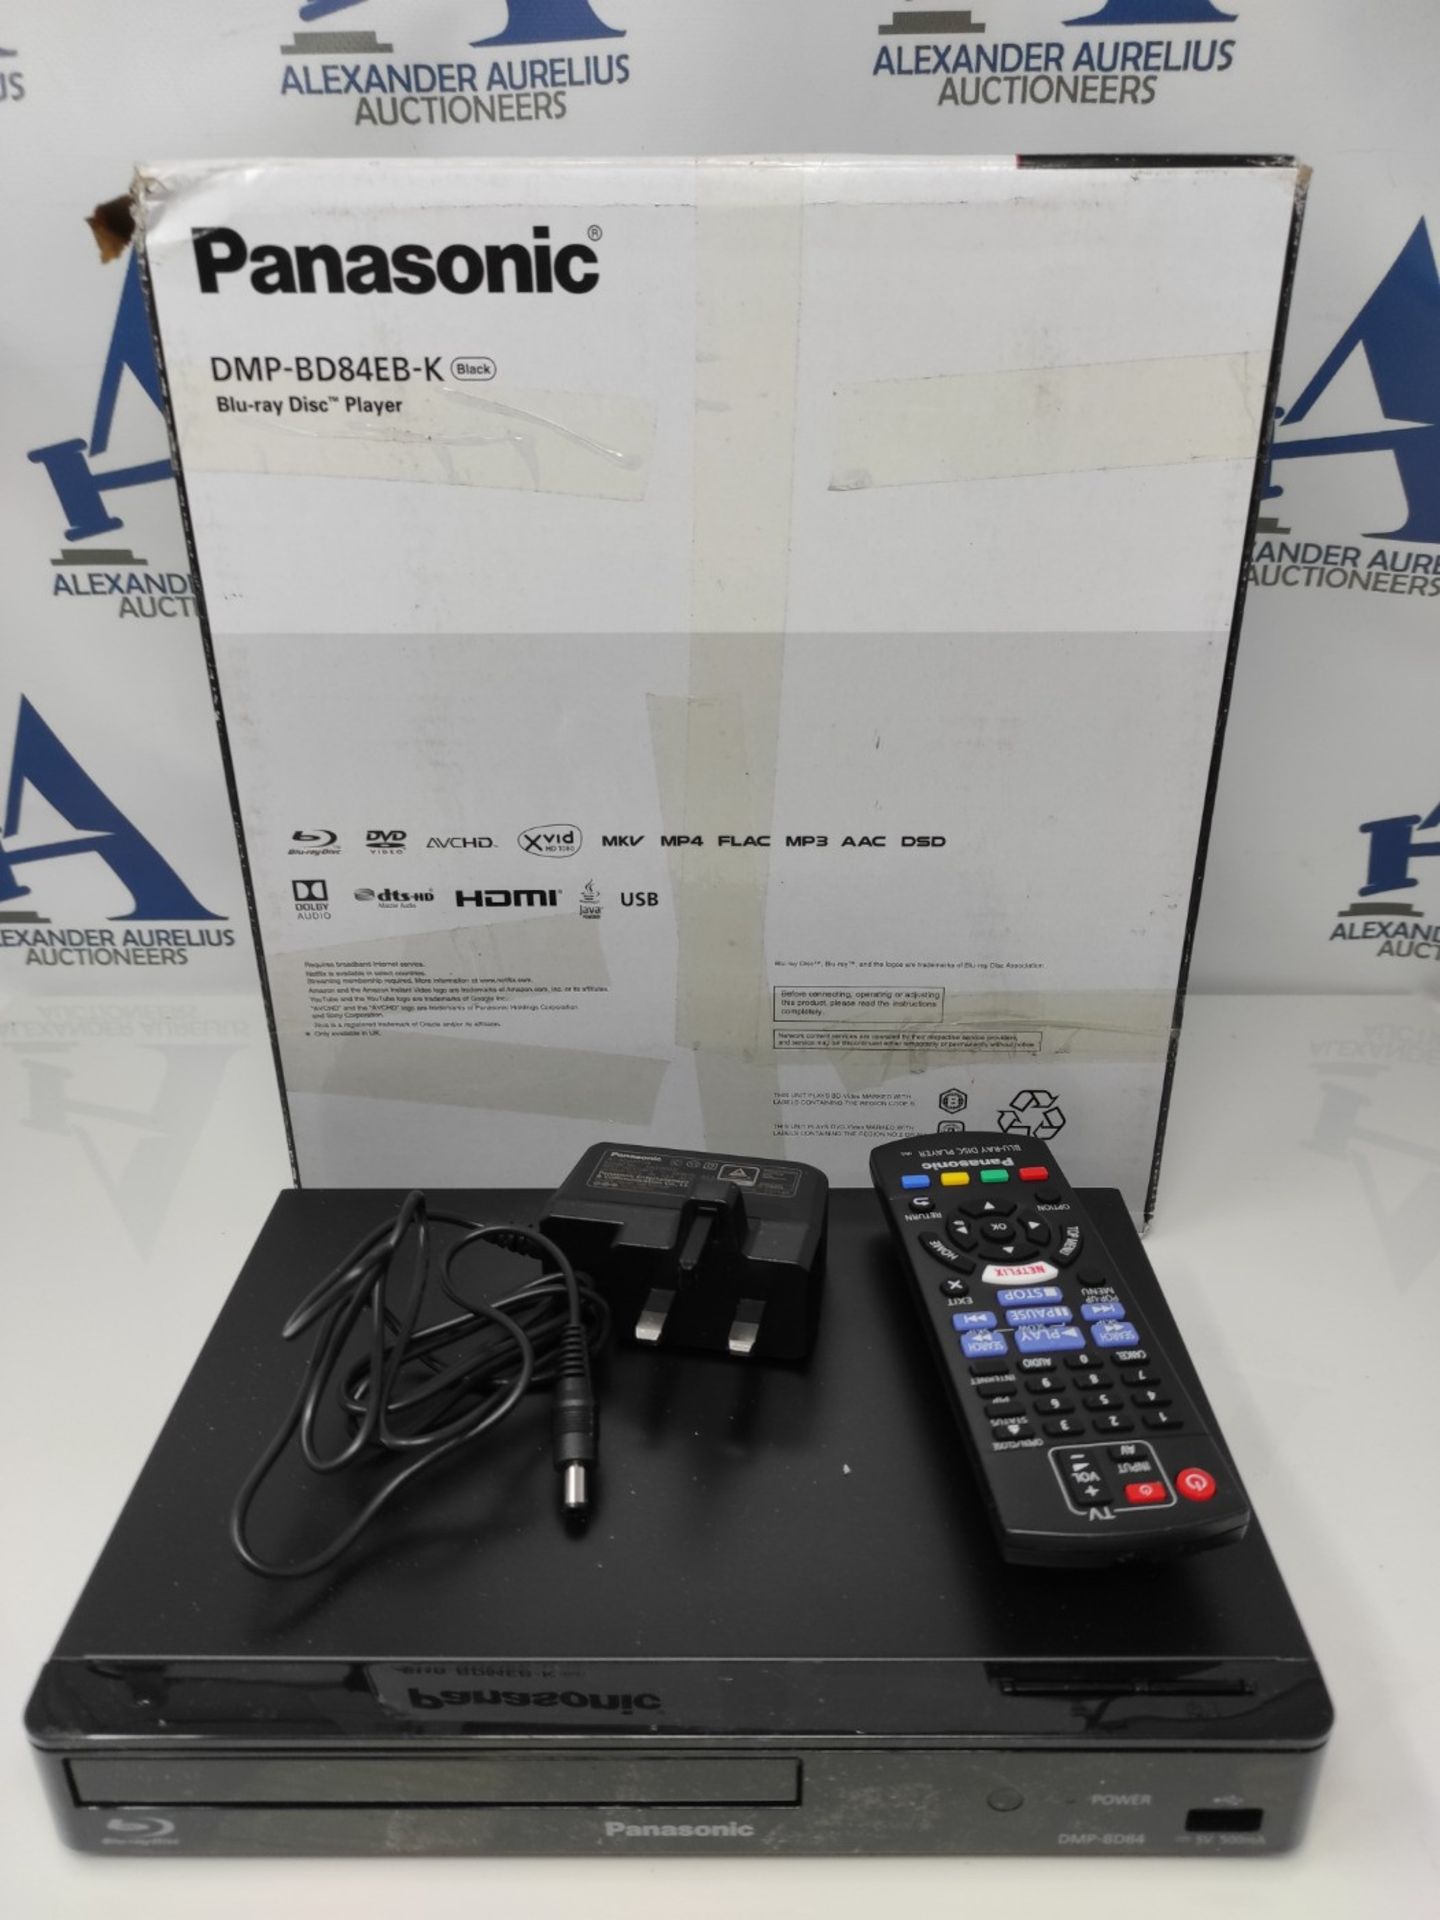 RRP £69.00 Panasonic DMP-BD84EB-K Smart Network 2D Blu-ray Disc/DVD Player - Black - Image 2 of 2